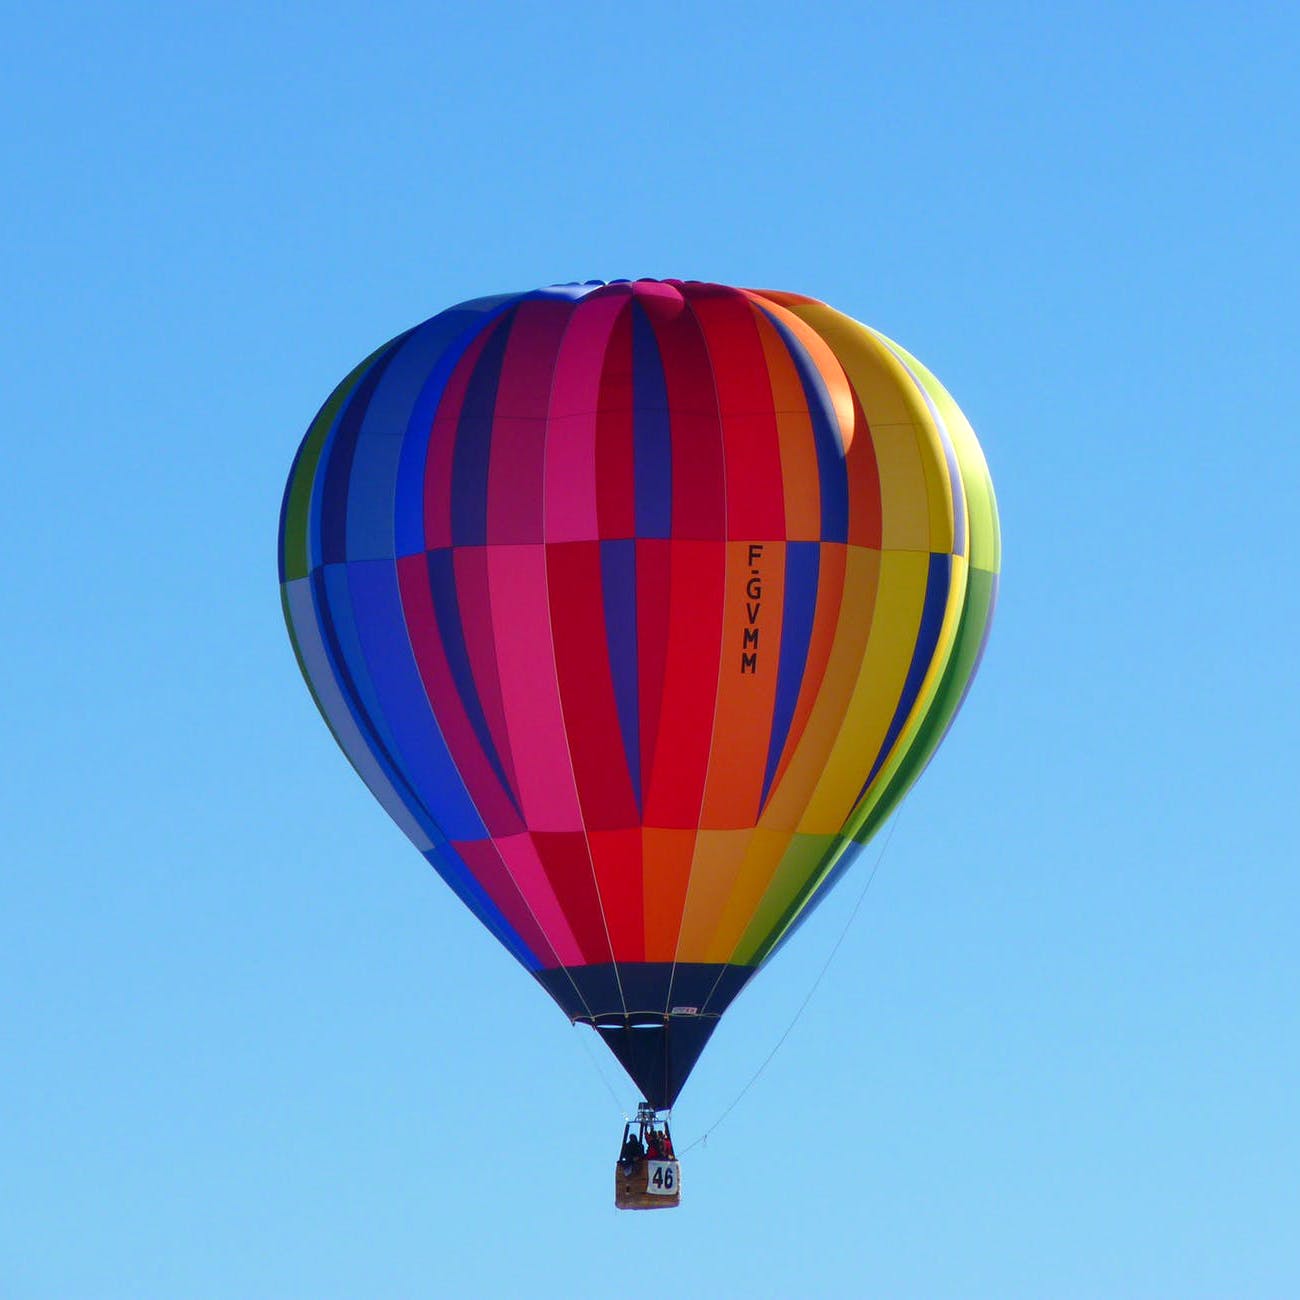 Hot air balloon,Hot air ballooning,Air travel,Air sports,Daytime,Sky,Balloon,Blue,Mode of transport,Vehicle